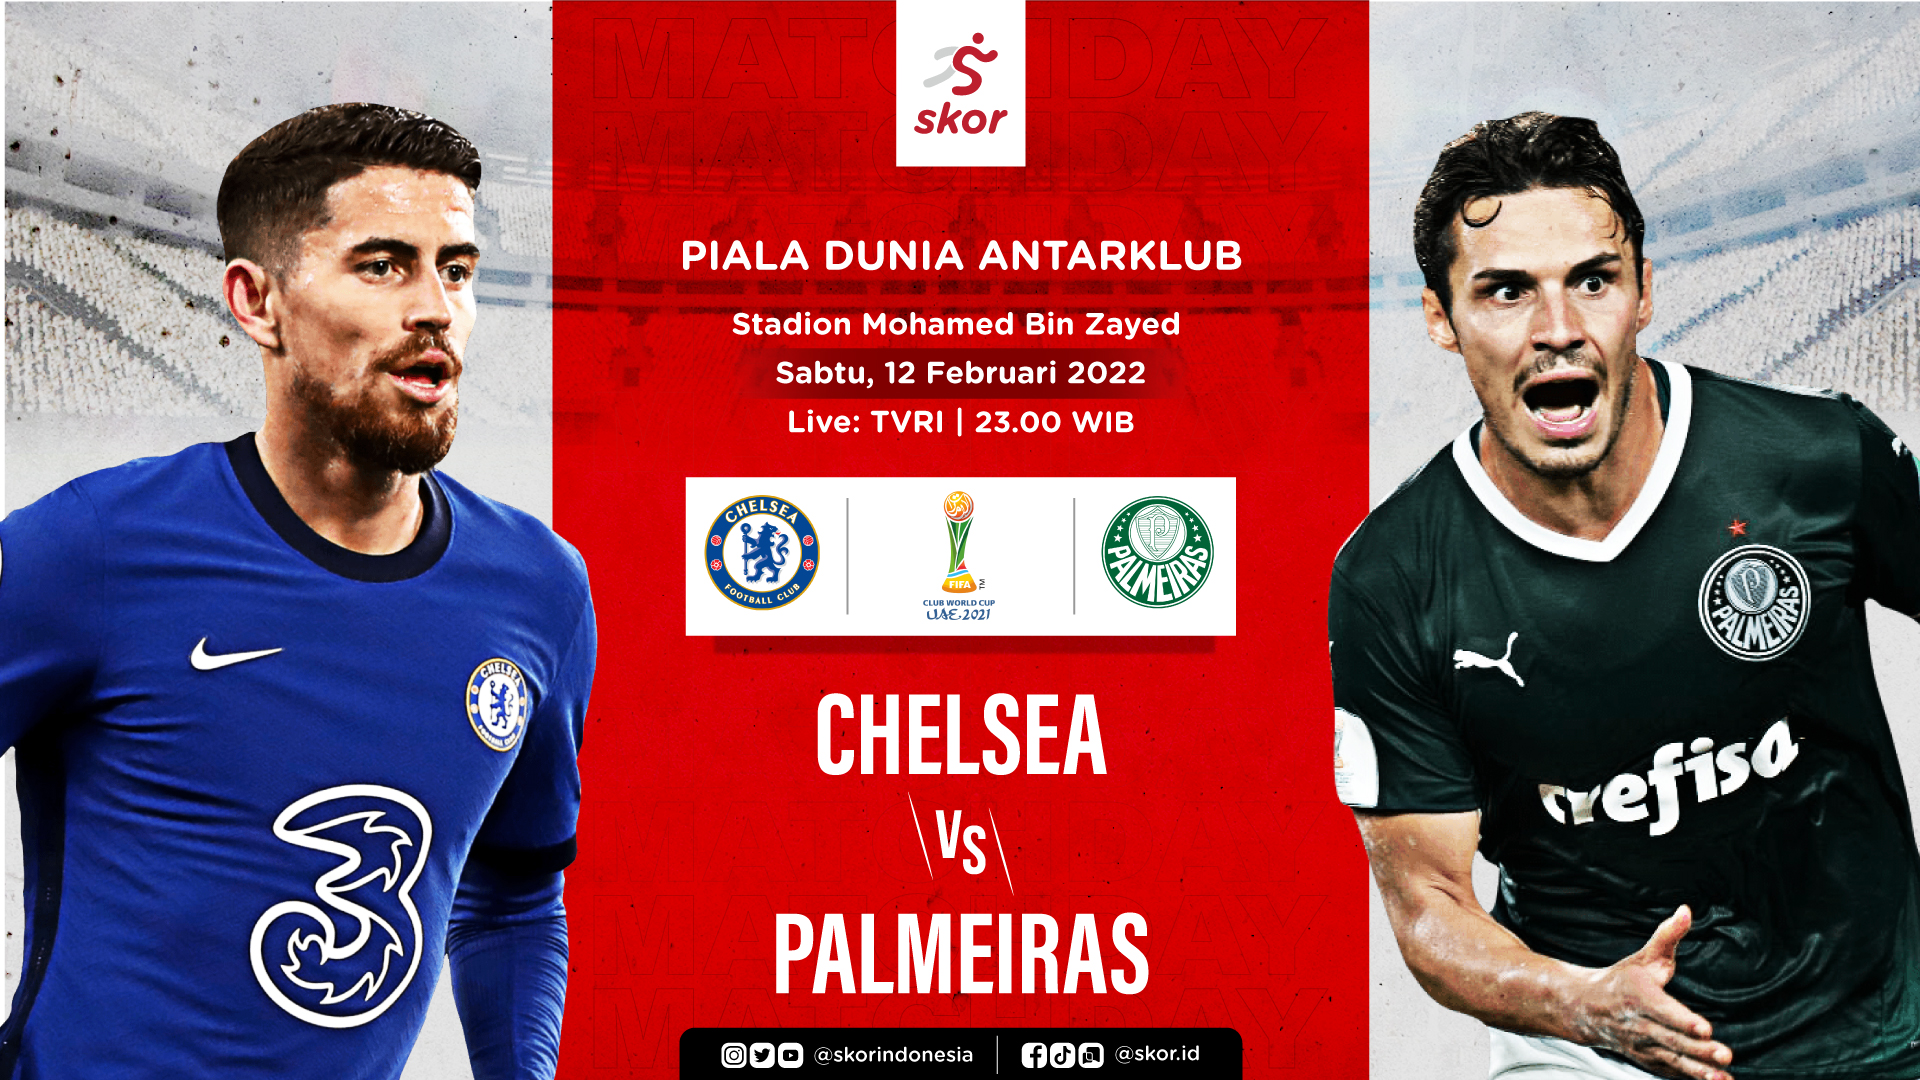 Link Live Streaming Chelsea vs Palmeiras di Final Piala Dunia Antarklub